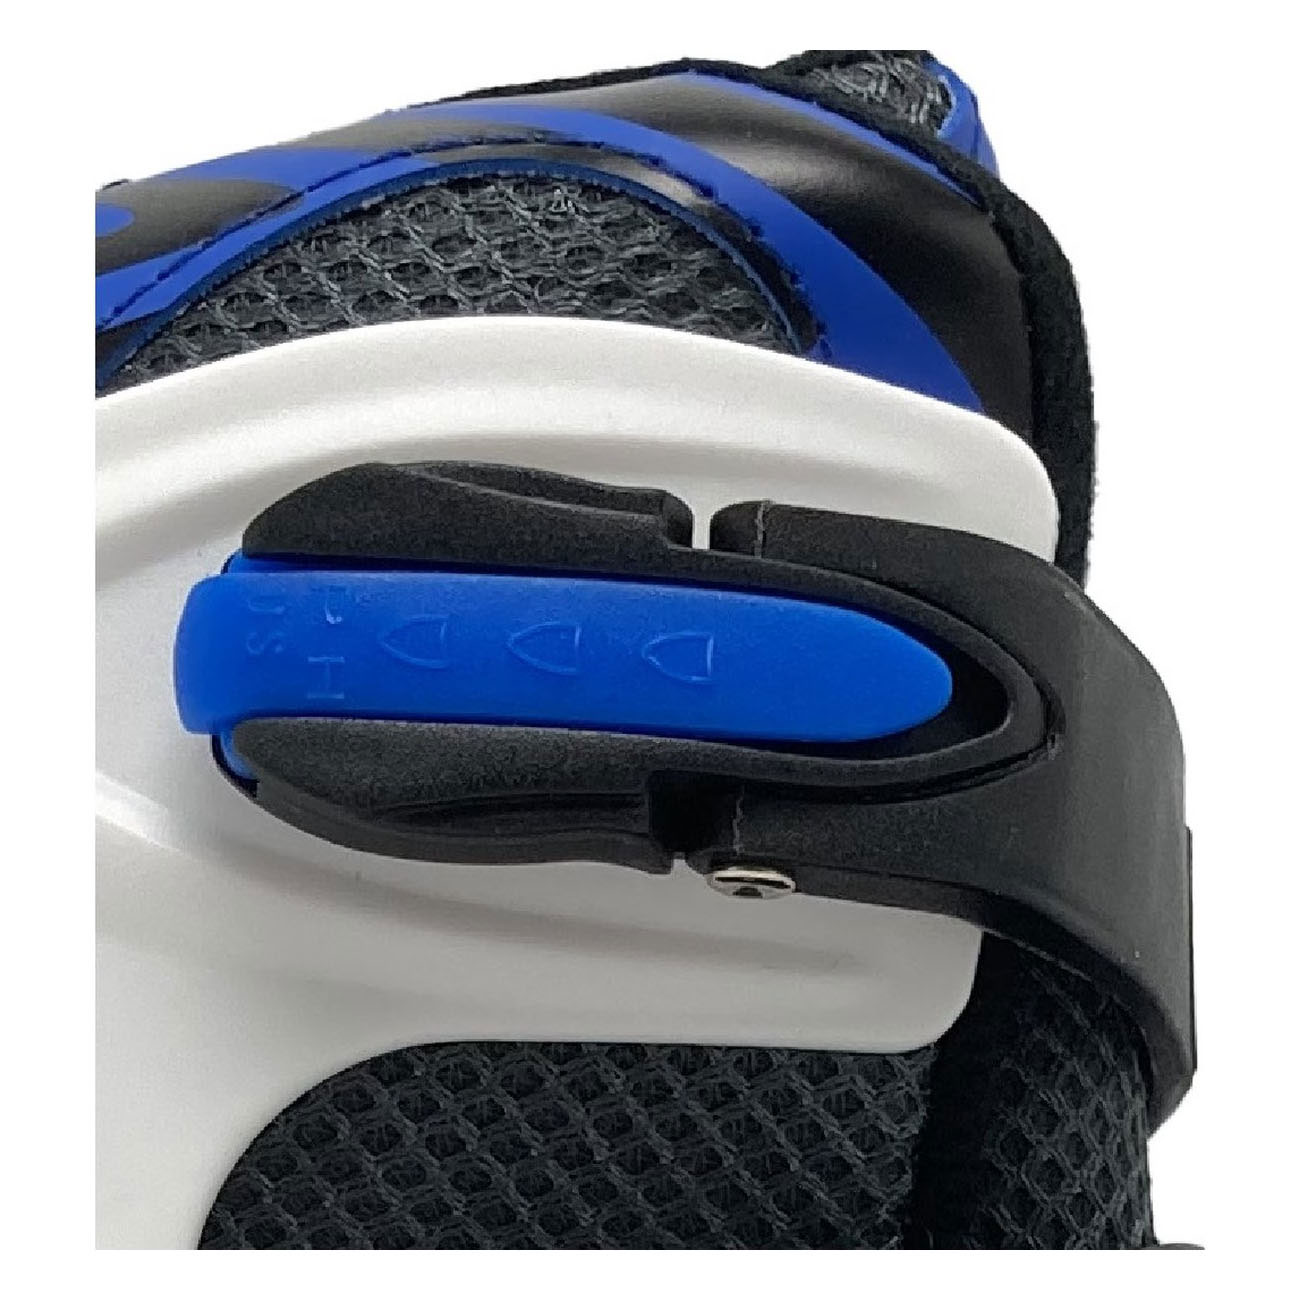 Inline Skates bleu/noir, taille 35-38